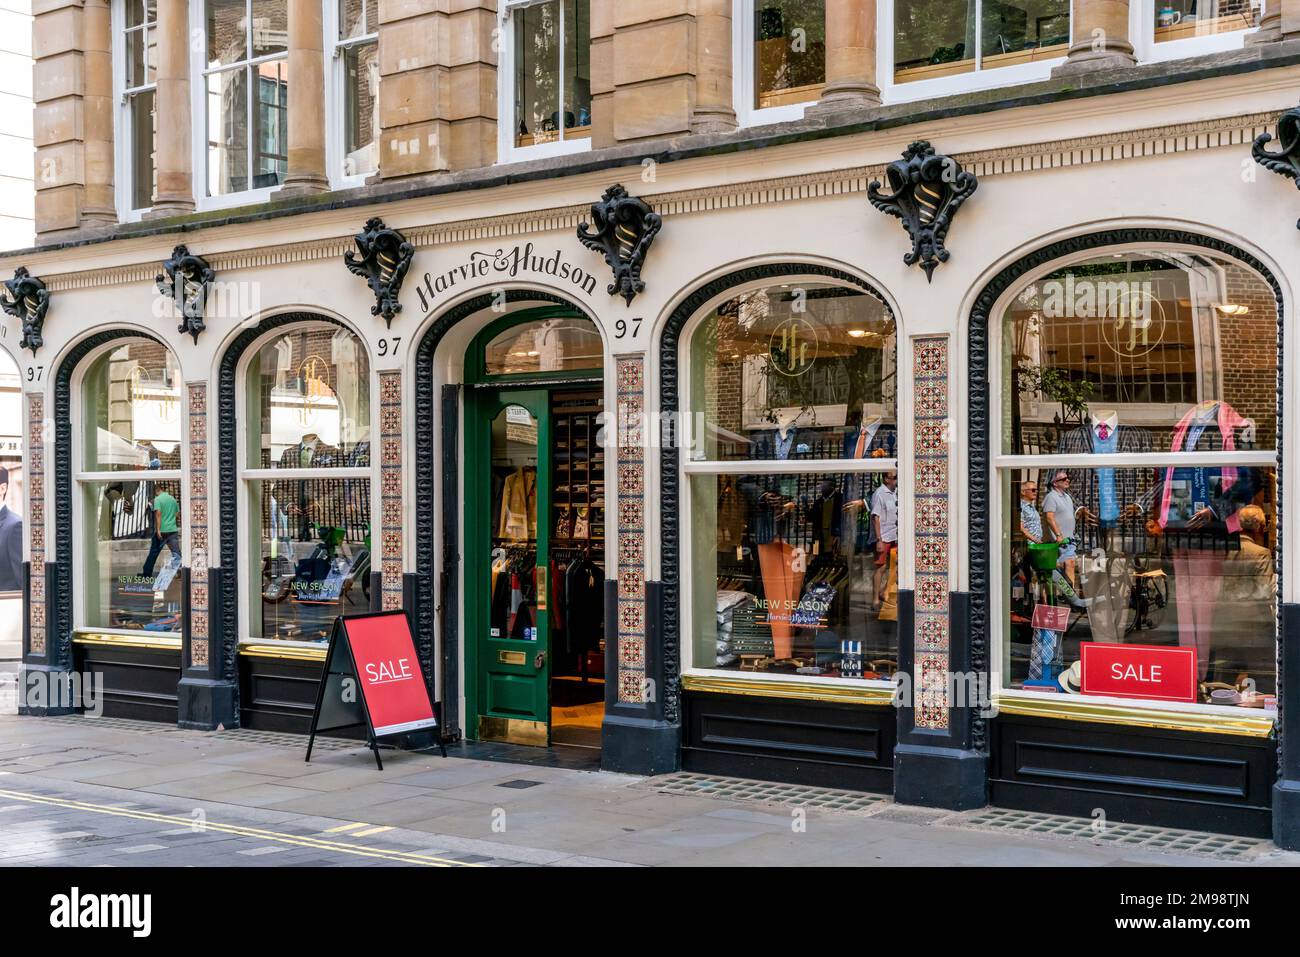 Harvie & Hudson Mens Clothing Store, Jermyn Street, London, Uk Stock ...